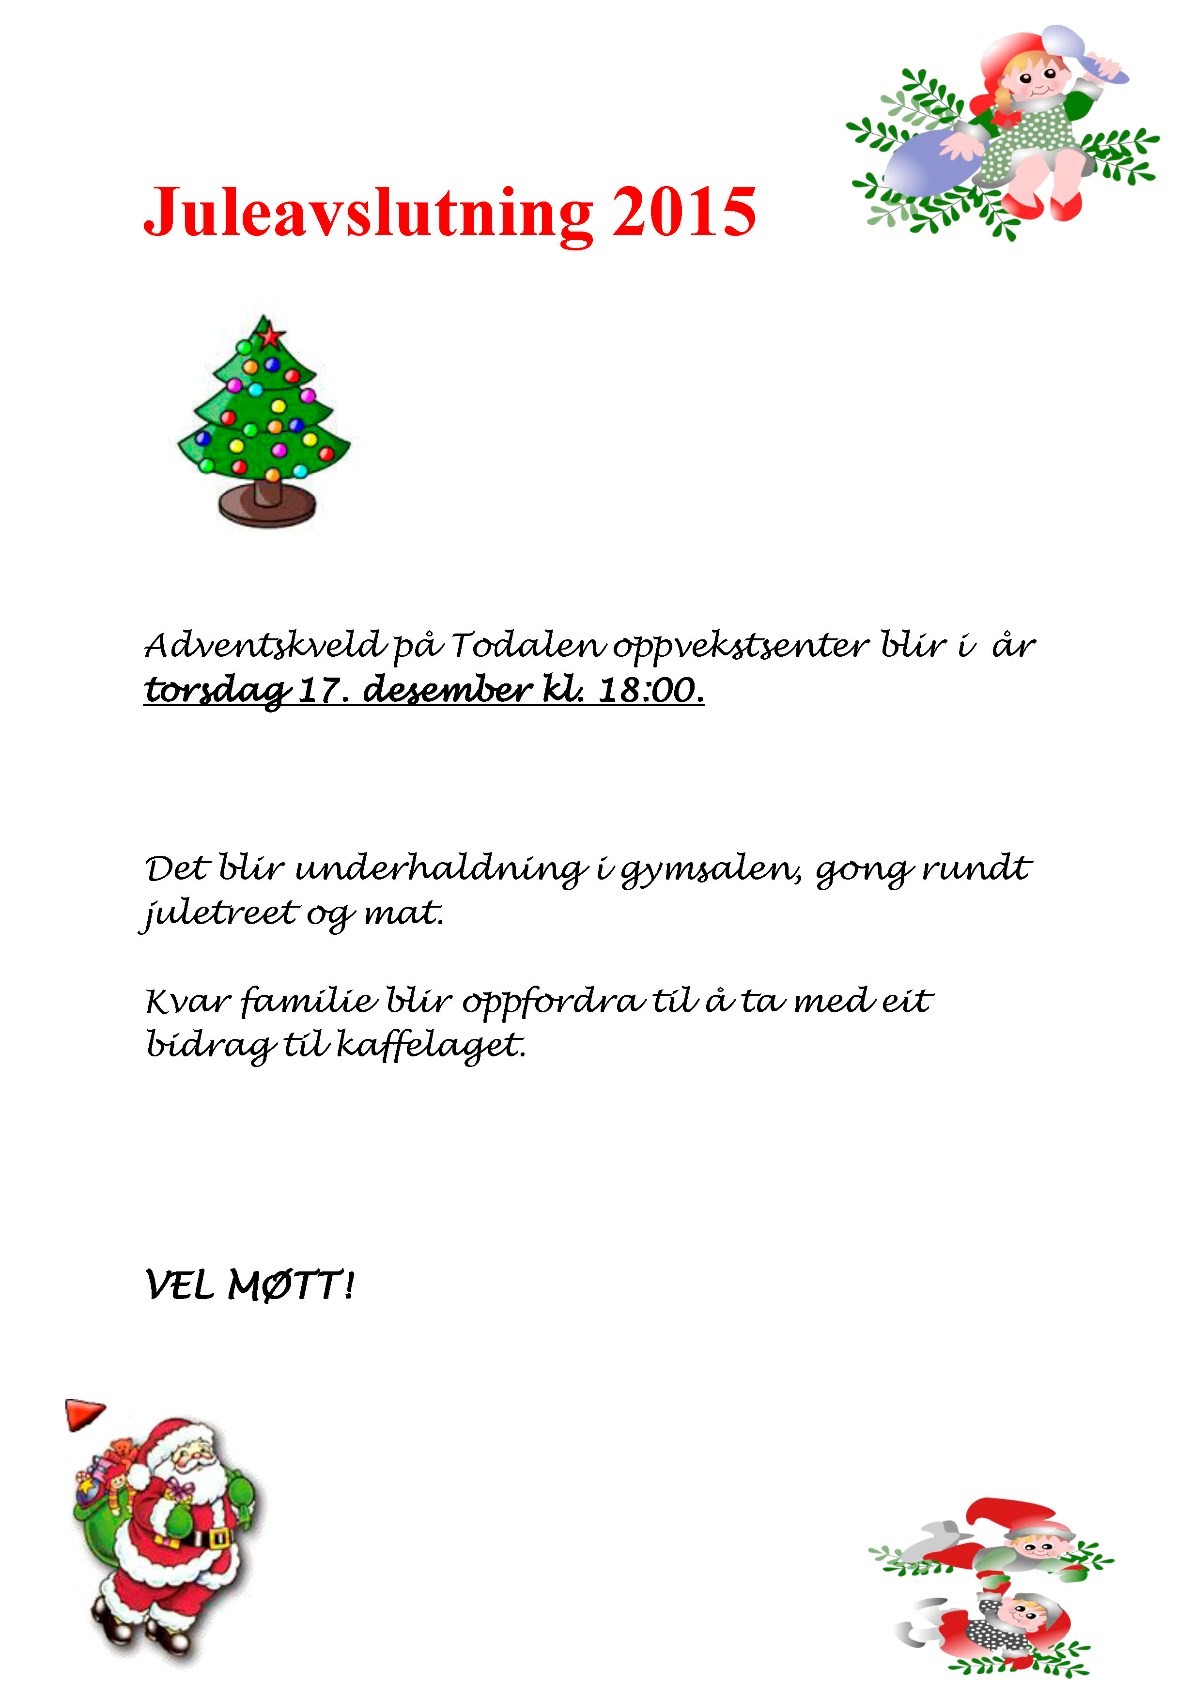 Plakat Juleavslutning 2015